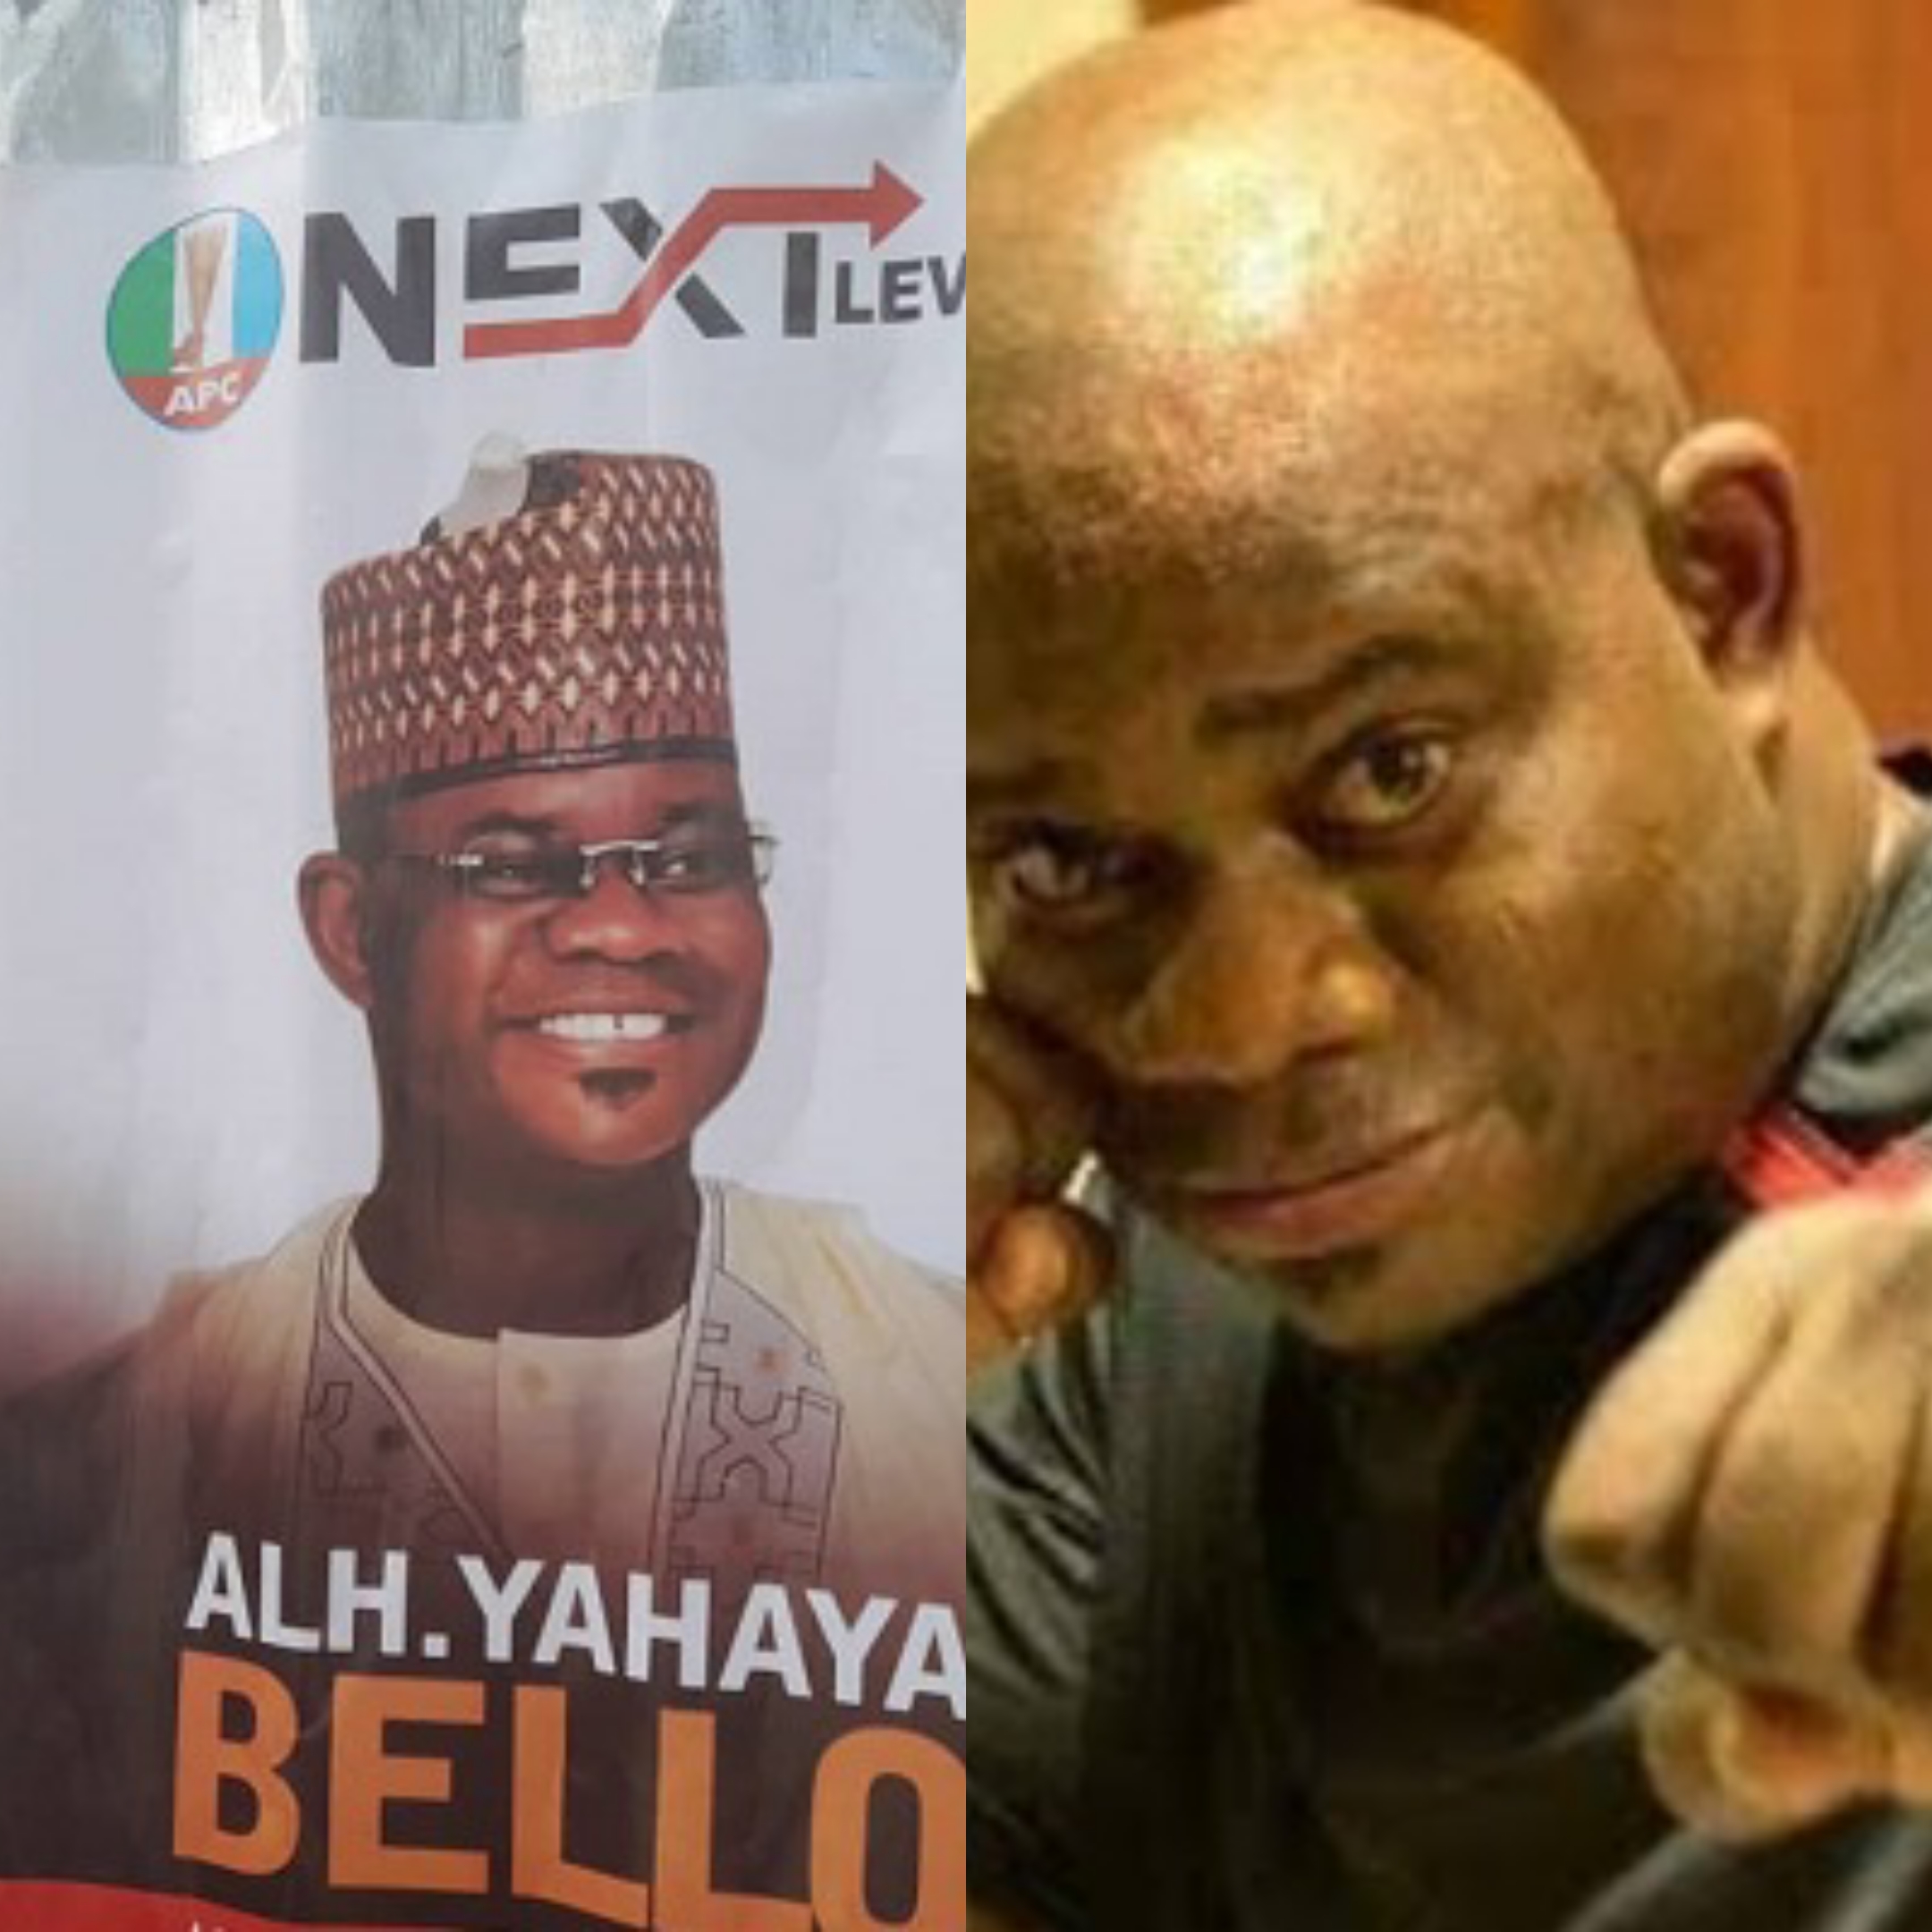 Campaign for Yahaya Bello to be APC chairman, crude joke taken too far- ex-Senator